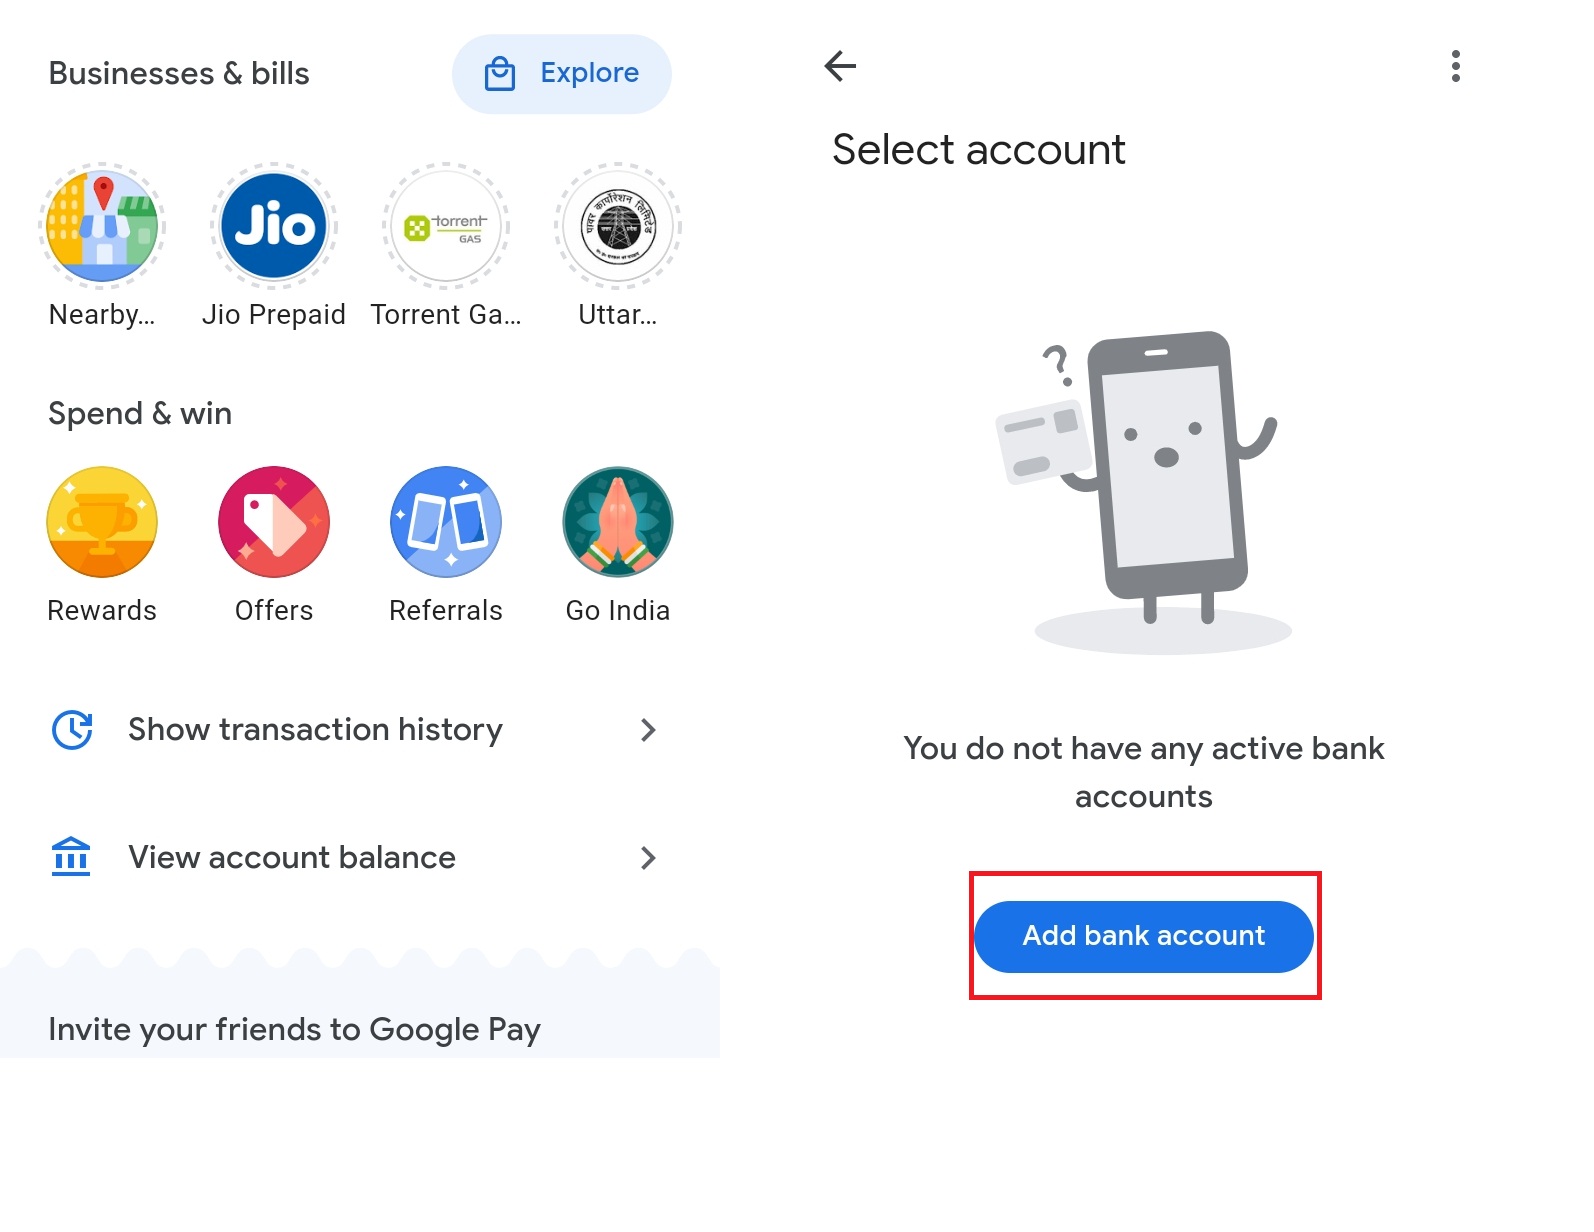 Bank Balance check करने वाला apps download करें | घर बैठे Bank Balance कैसे चेक करें?